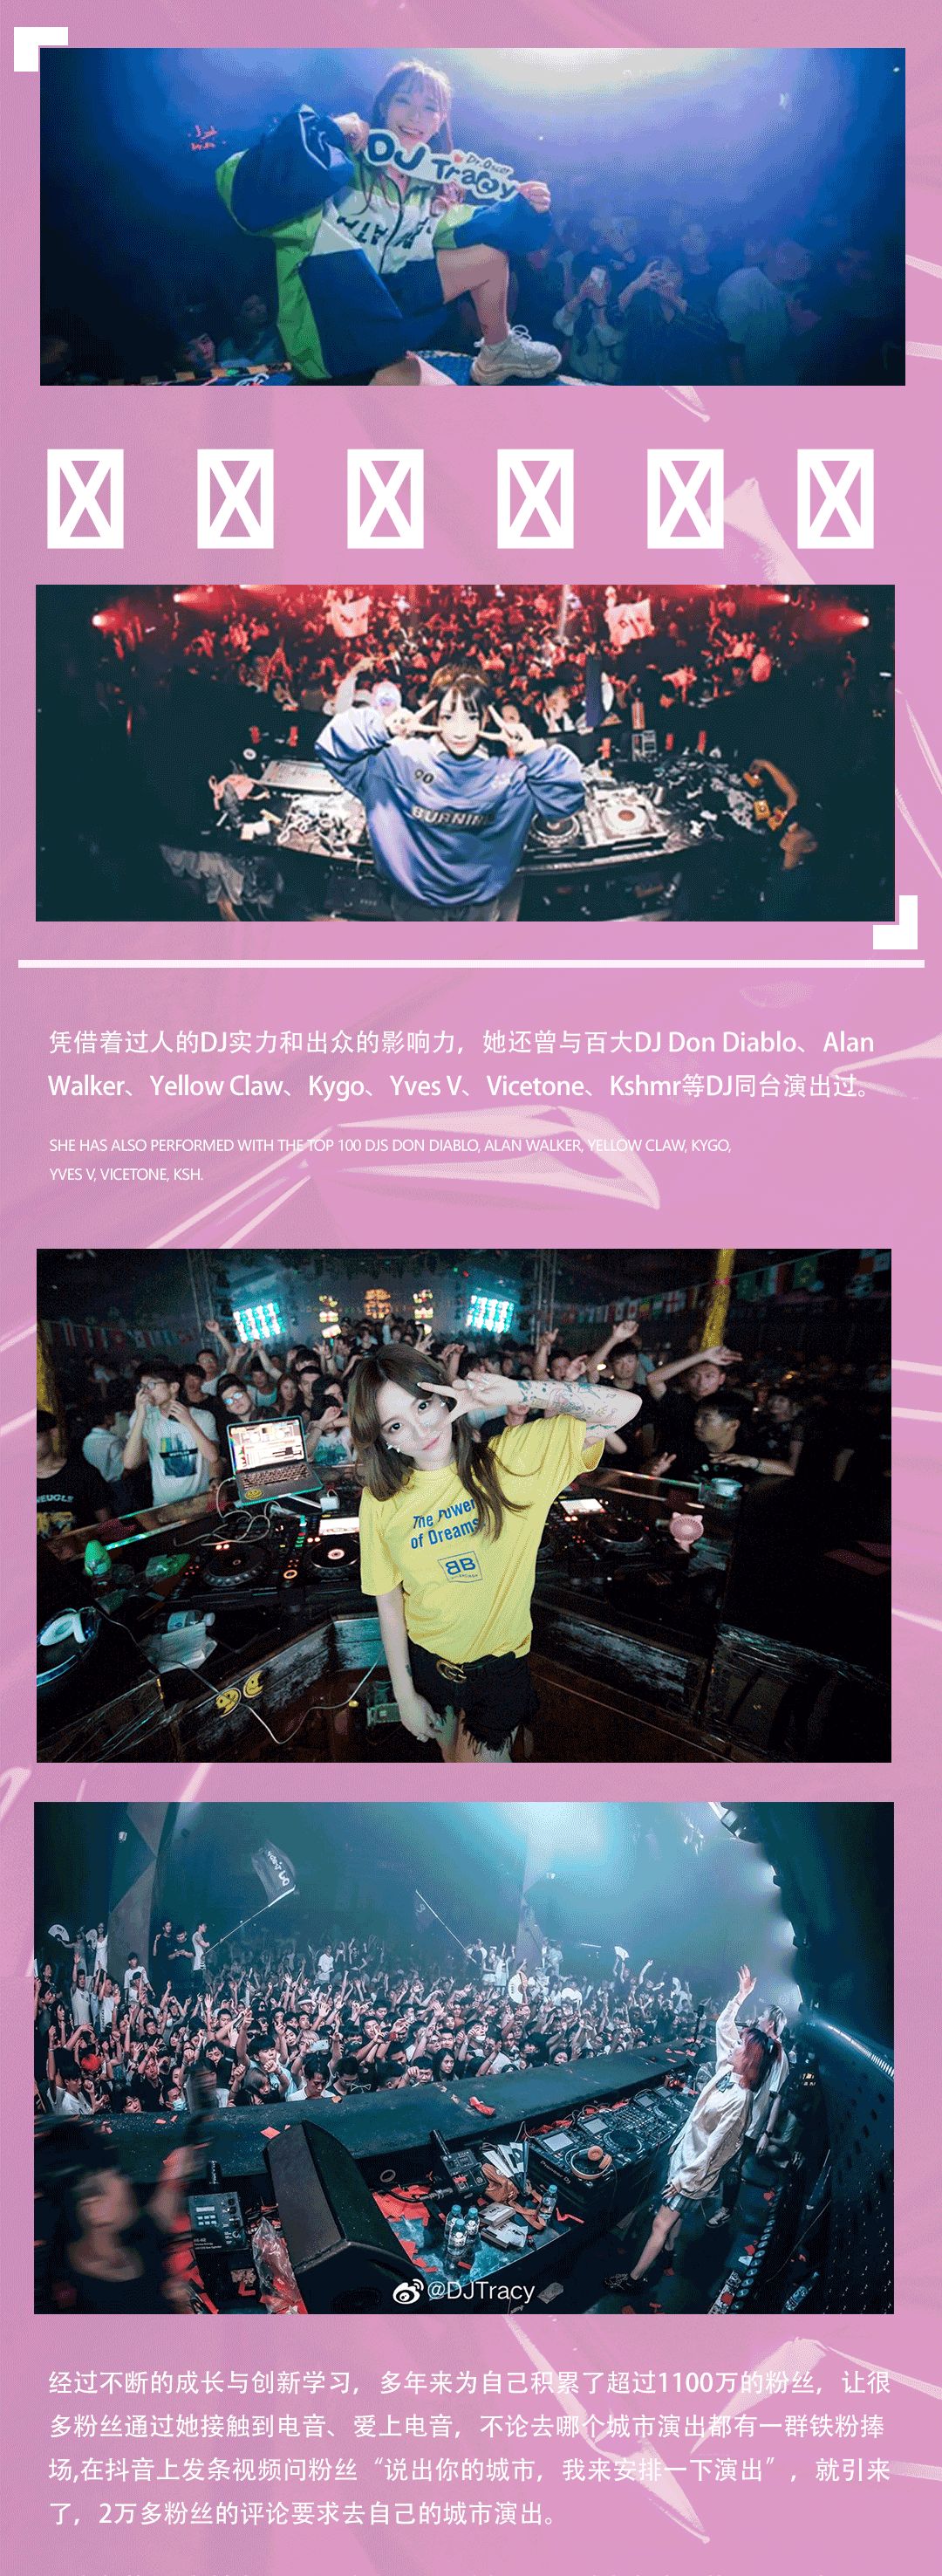 Super Master|2021.07.17，百变激萌小仙女DJ TRACY，在线呼唤！-九江苏博马斯特酒吧/SuperMasterClub